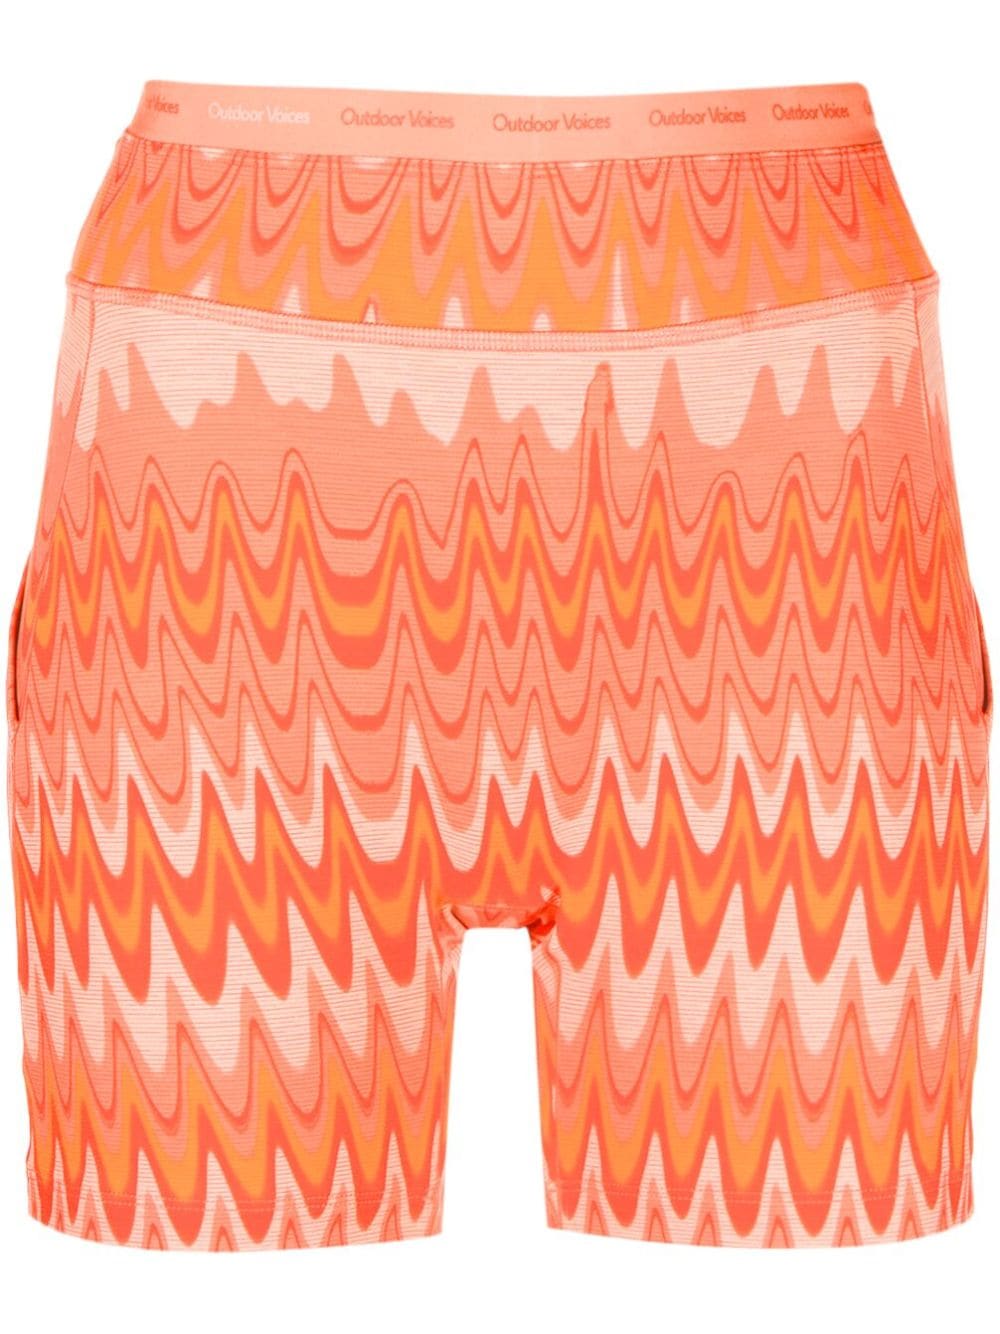 Outdoor Voices Thrive 5" printed running shorts - Orange